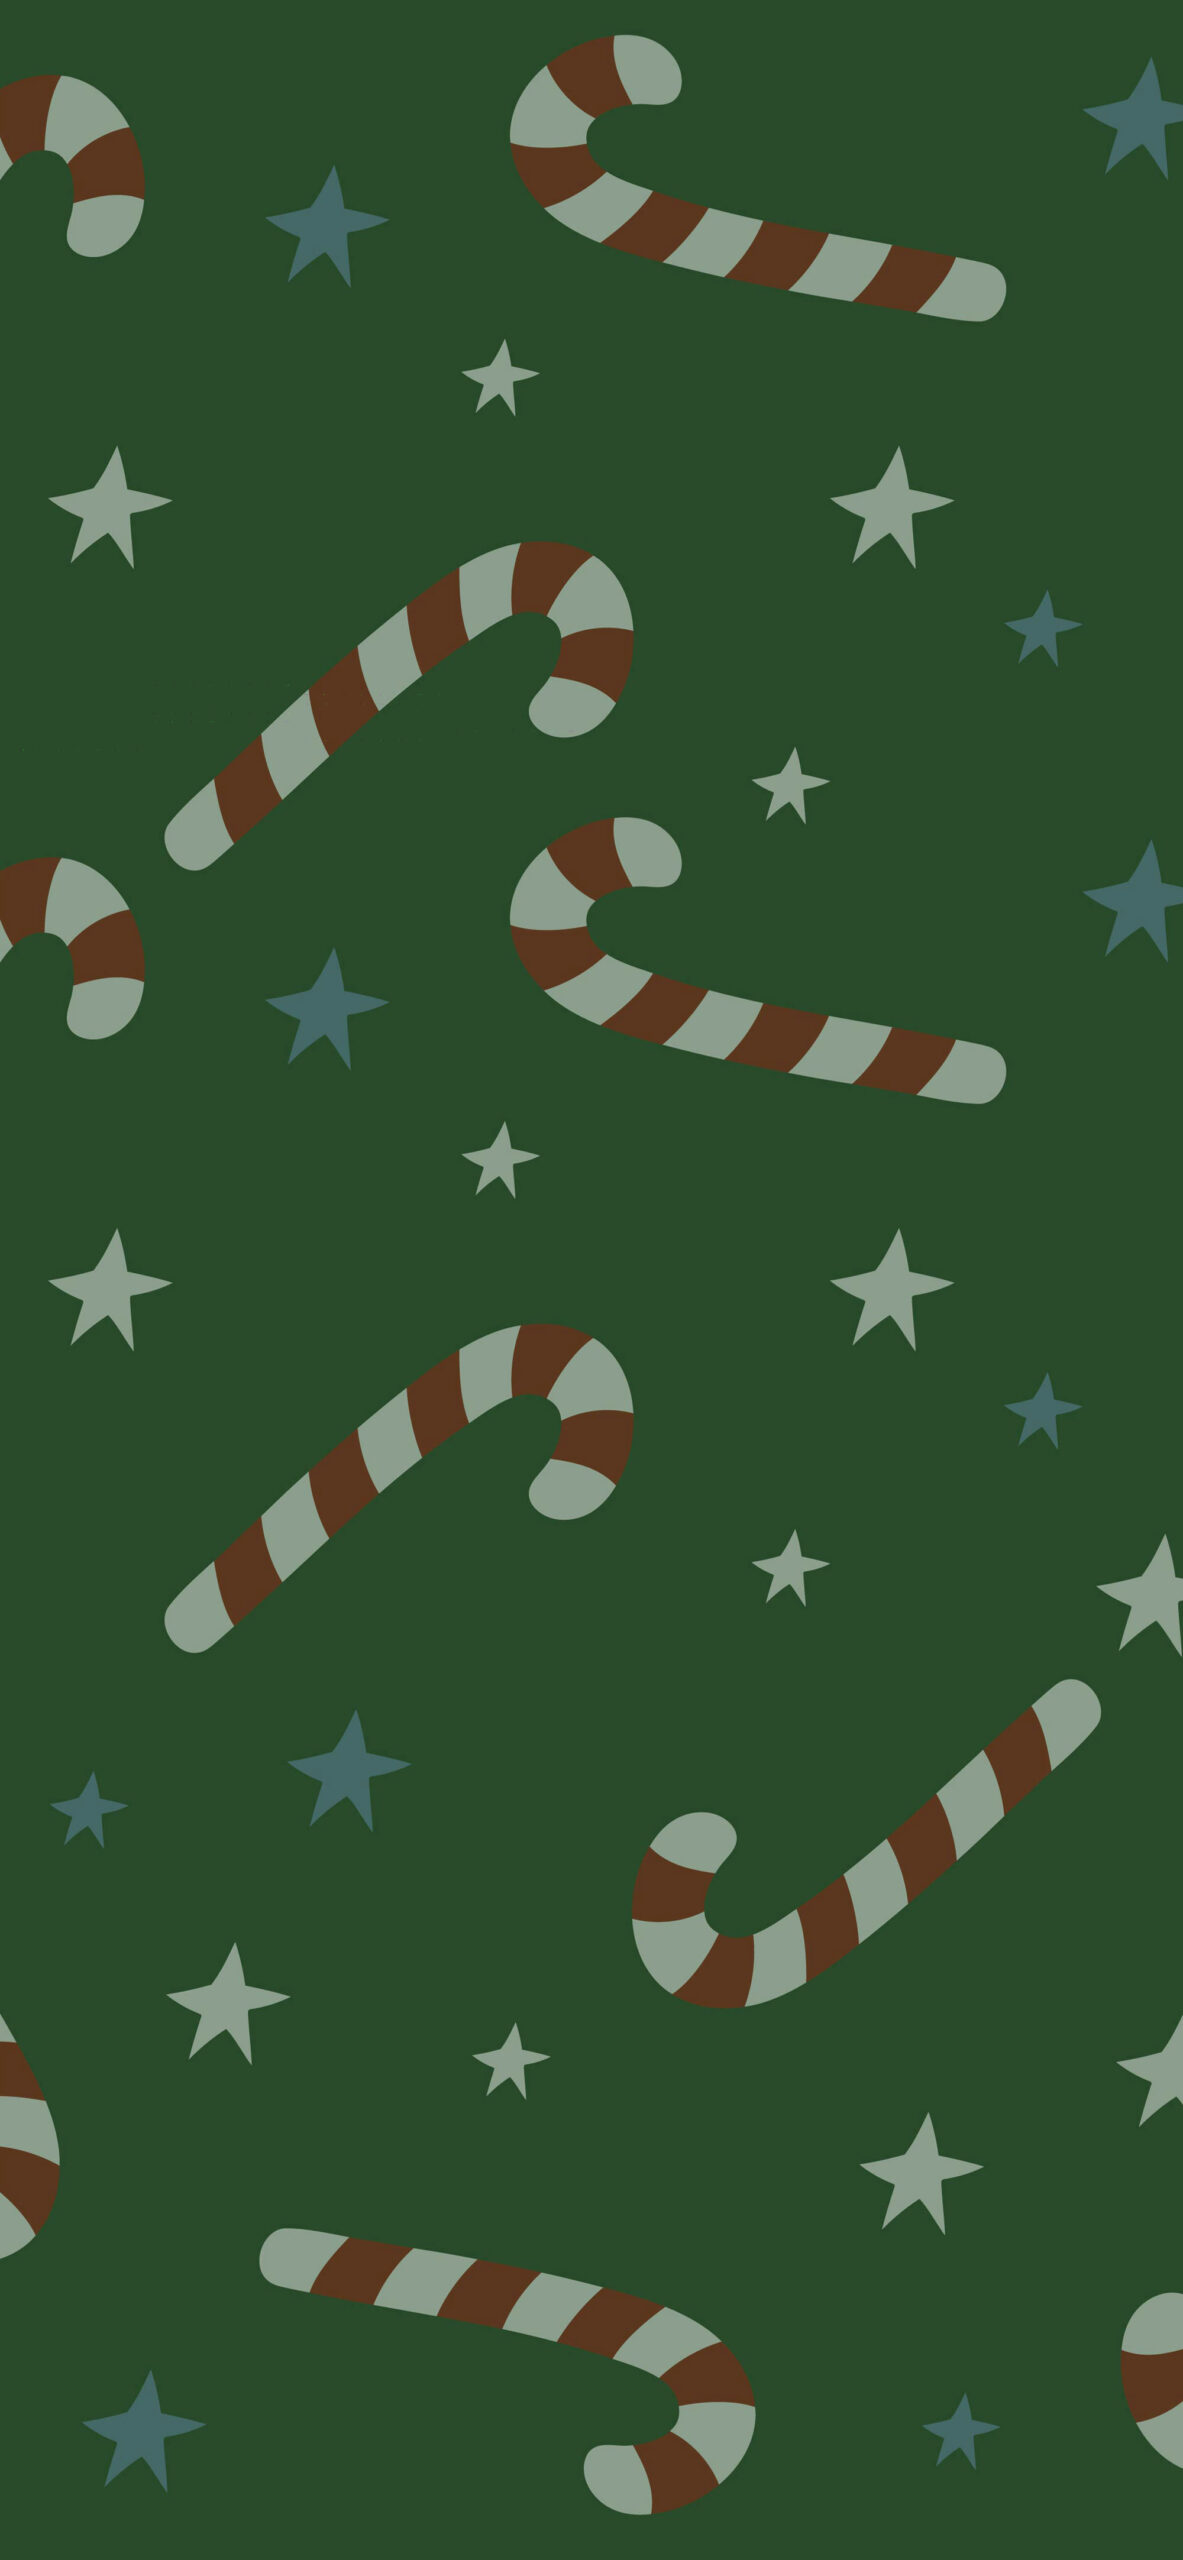 Merry Christmas Green Wallpaper - Aesthetic Christmas Wallpaper